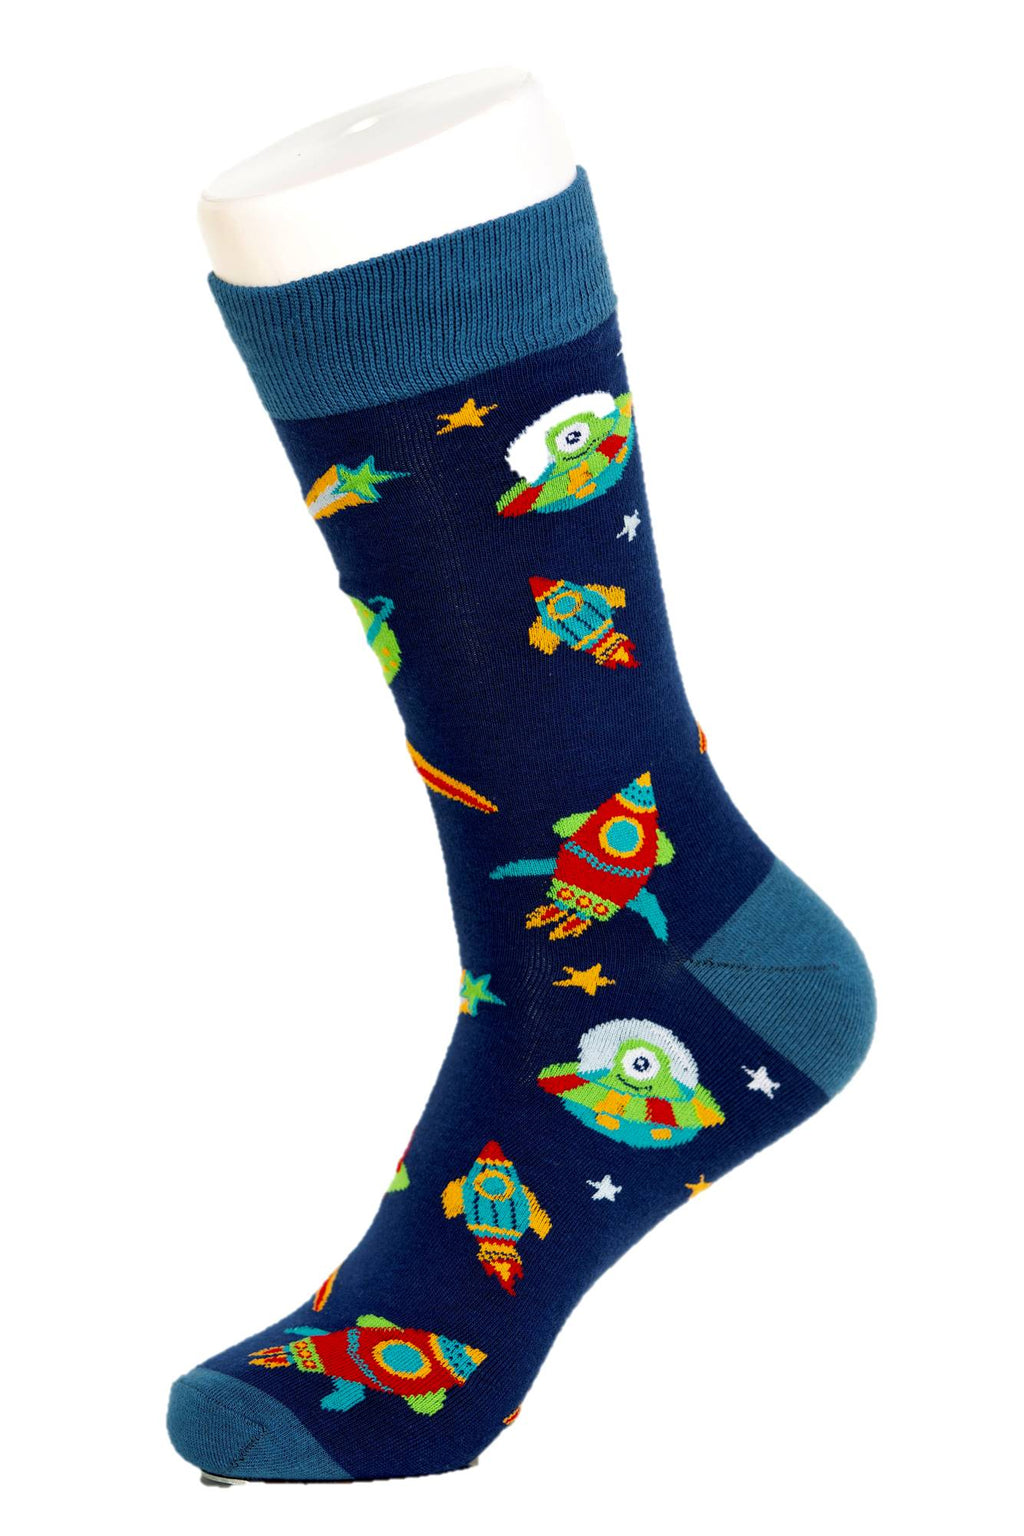 Space Theme Novelty Socks